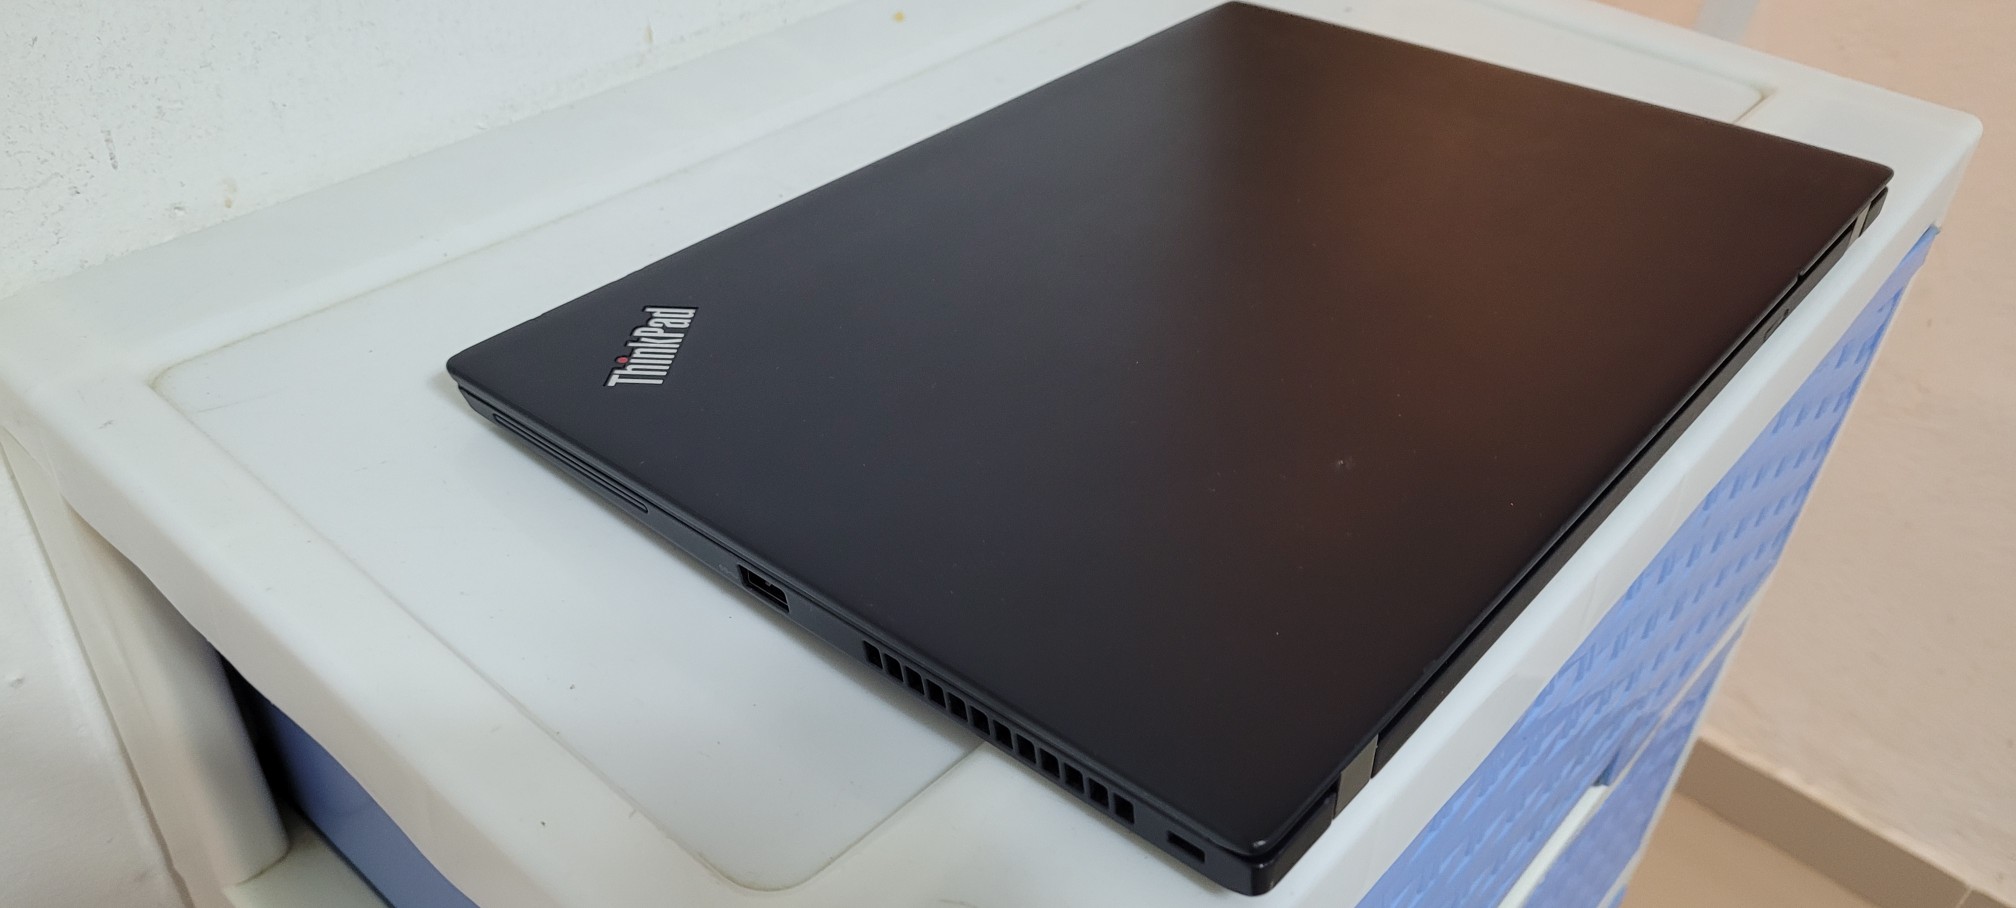 computadoras y laptops - Lenovo T450 14 Pulg Core i7 Ram 8gb Disco 256gb SSD hdmi 2